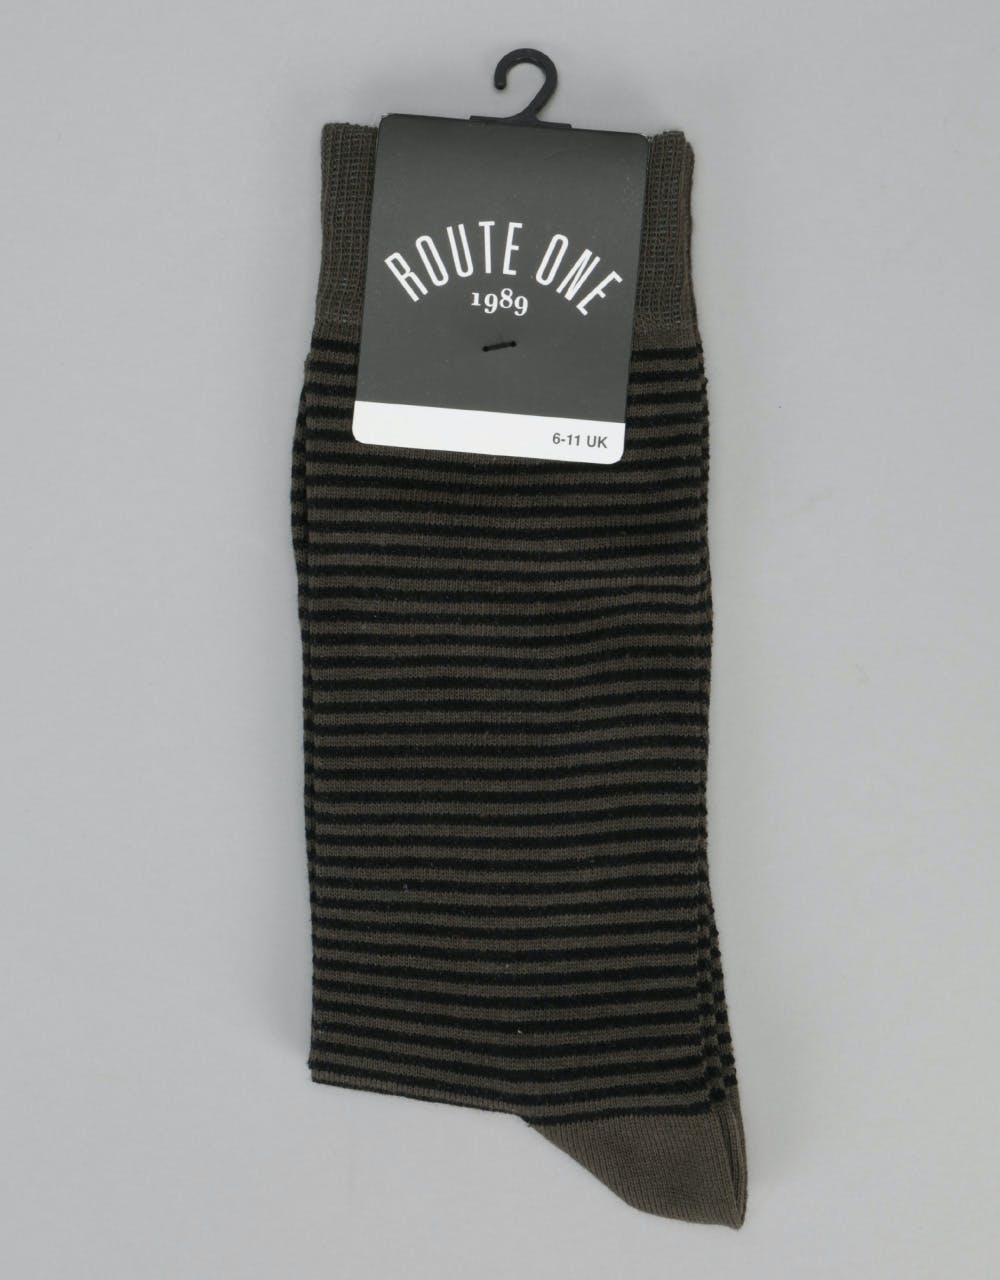 Route One Thin Stripe Socks - Black/Olive